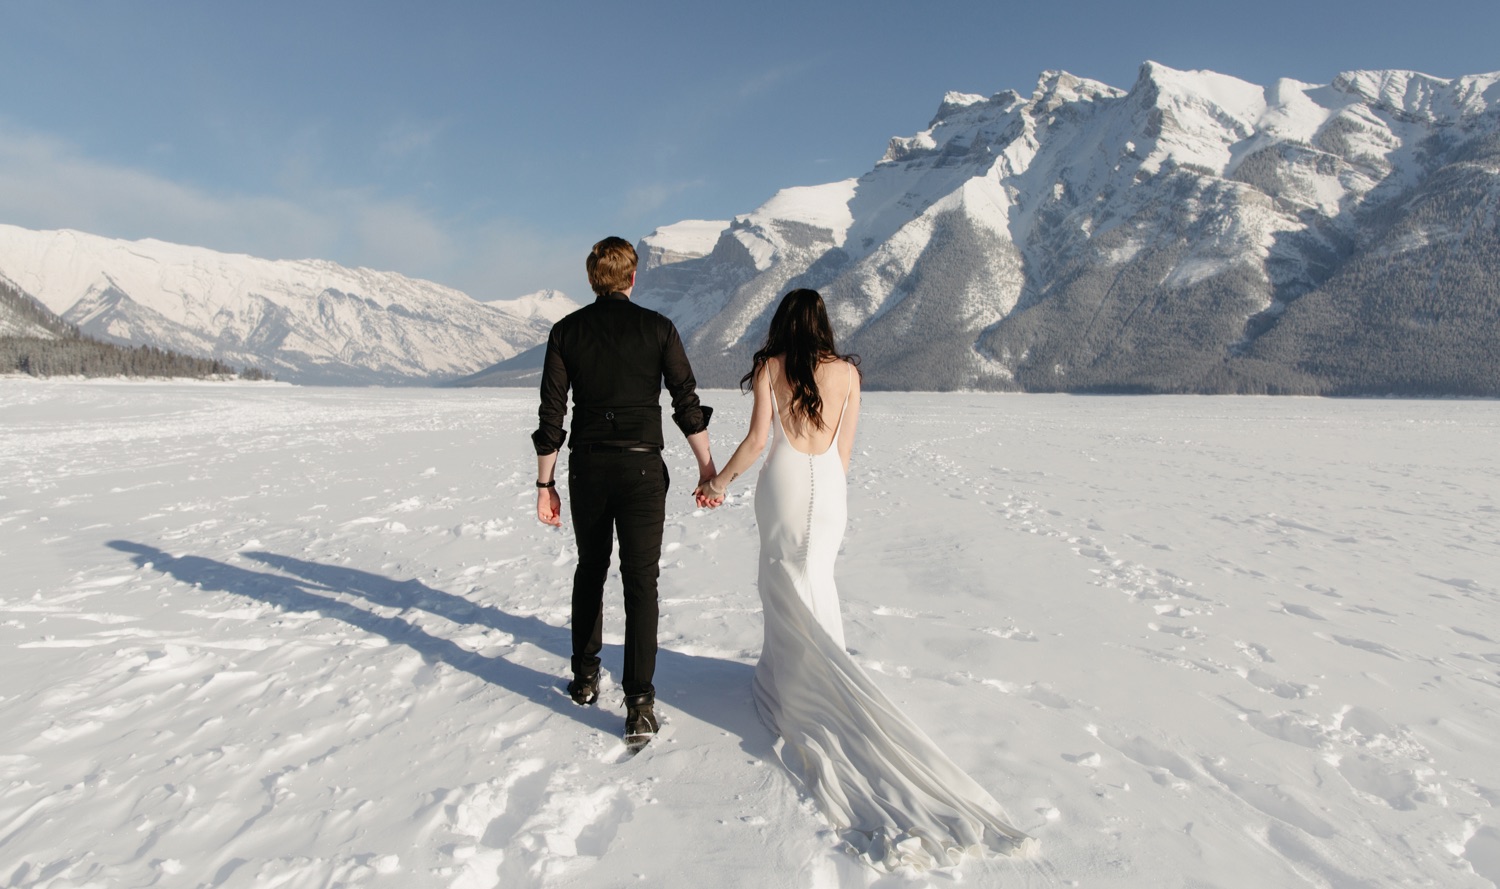 Wedding photography session on frozen Lake Minnewanka in winter